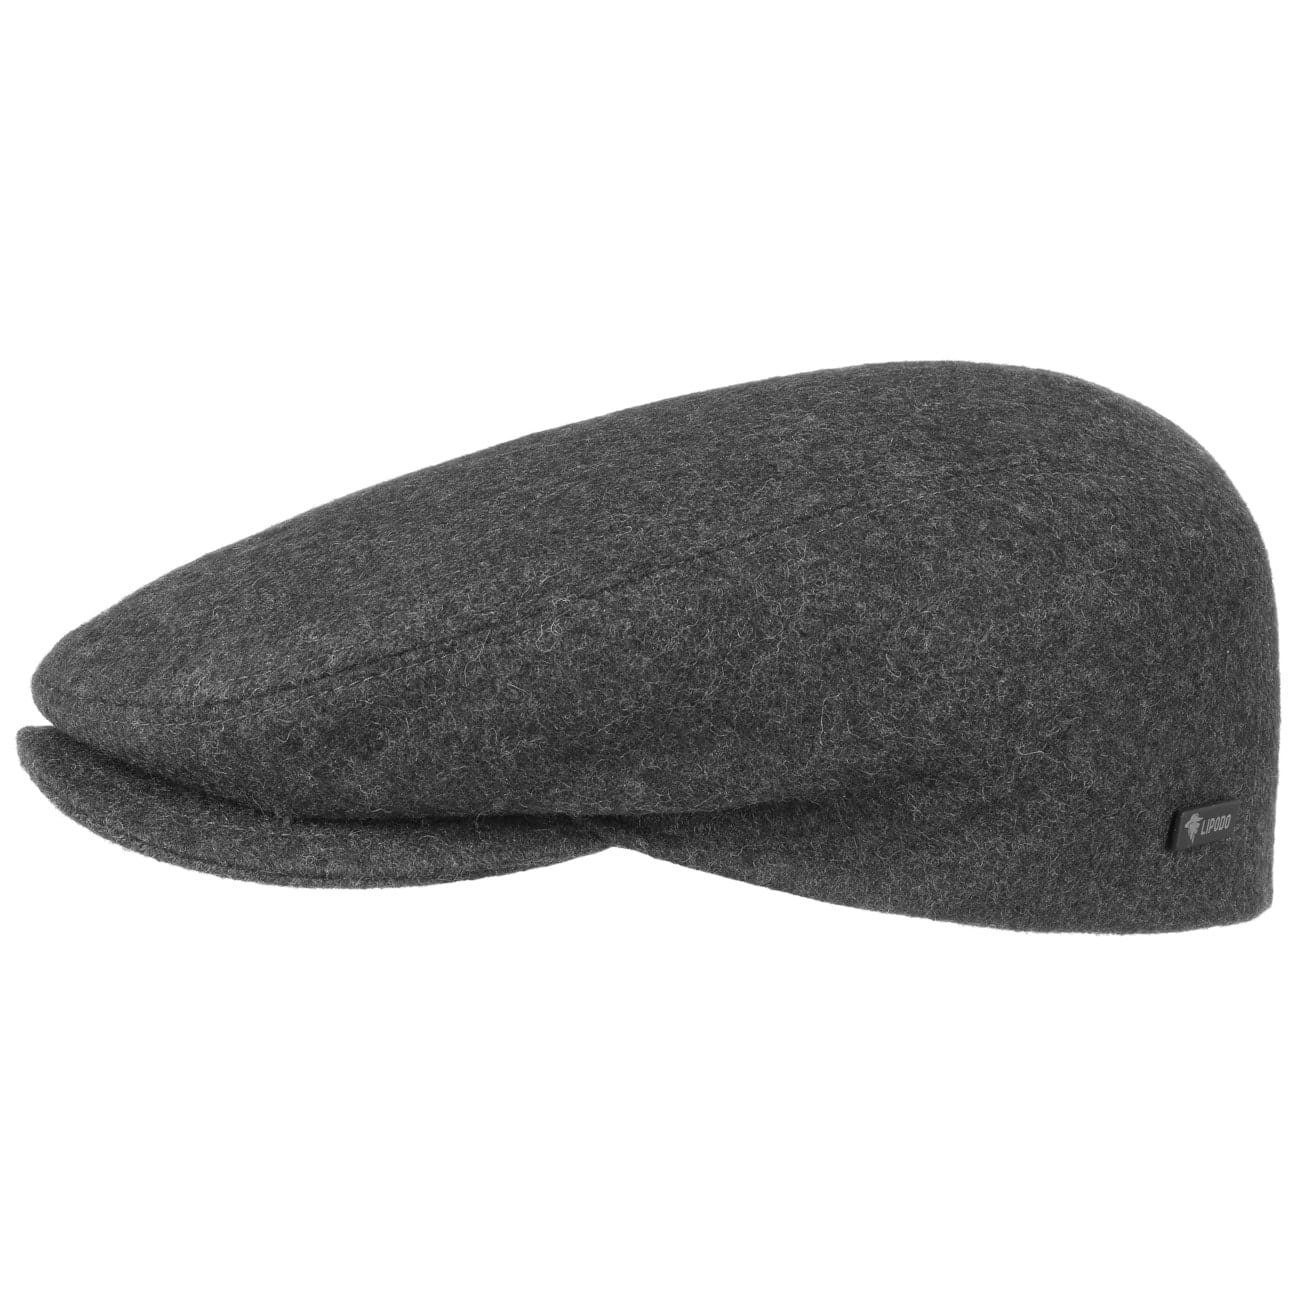 Lipodo Flat Cap (1-St) Flatcap mit Schirm, Made in Italy